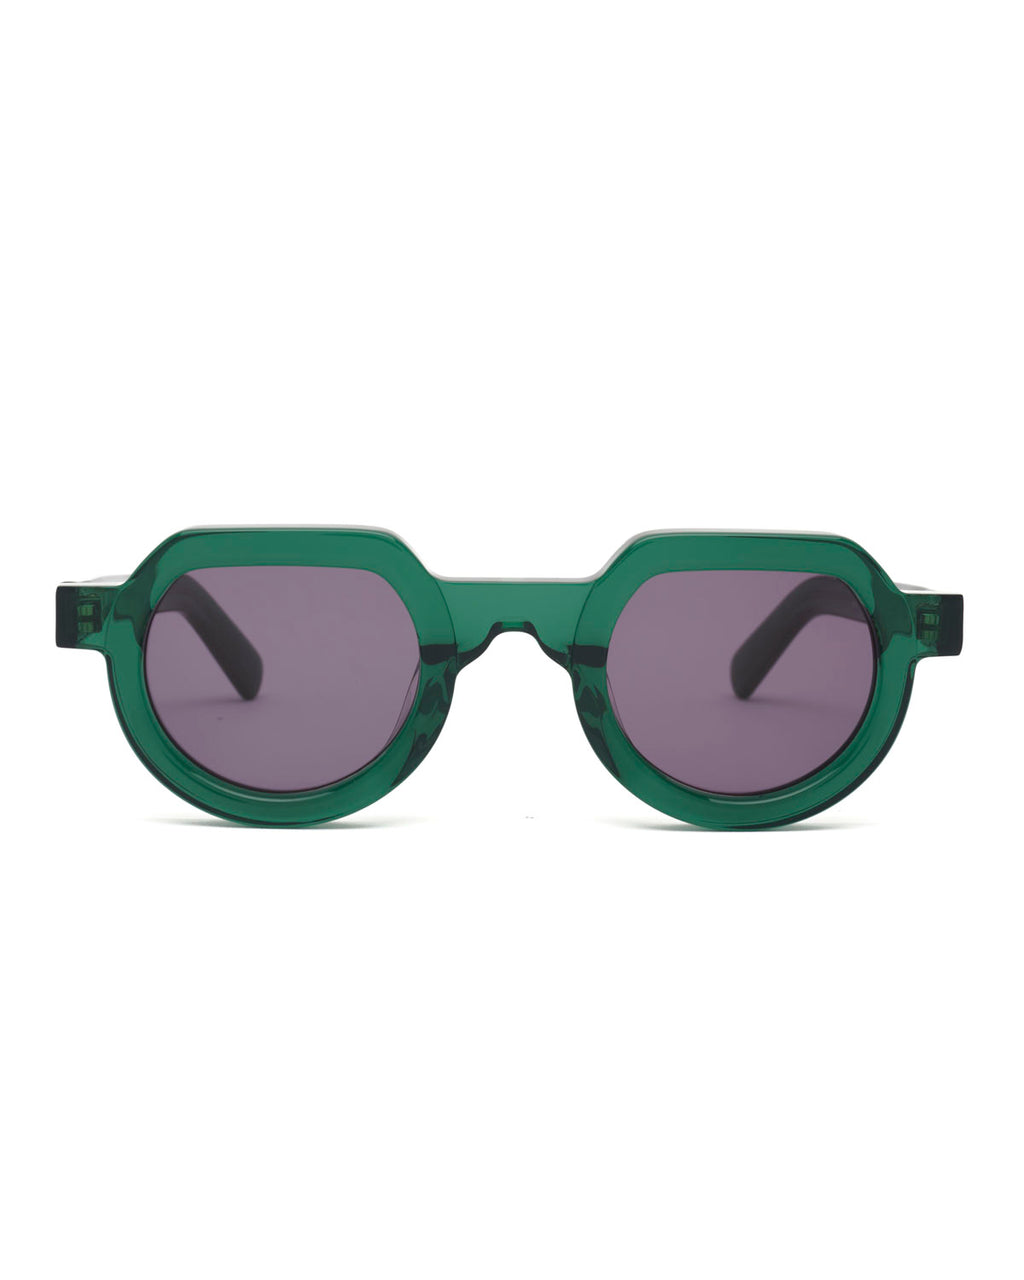 Tani Sunglasses, Green Glitter